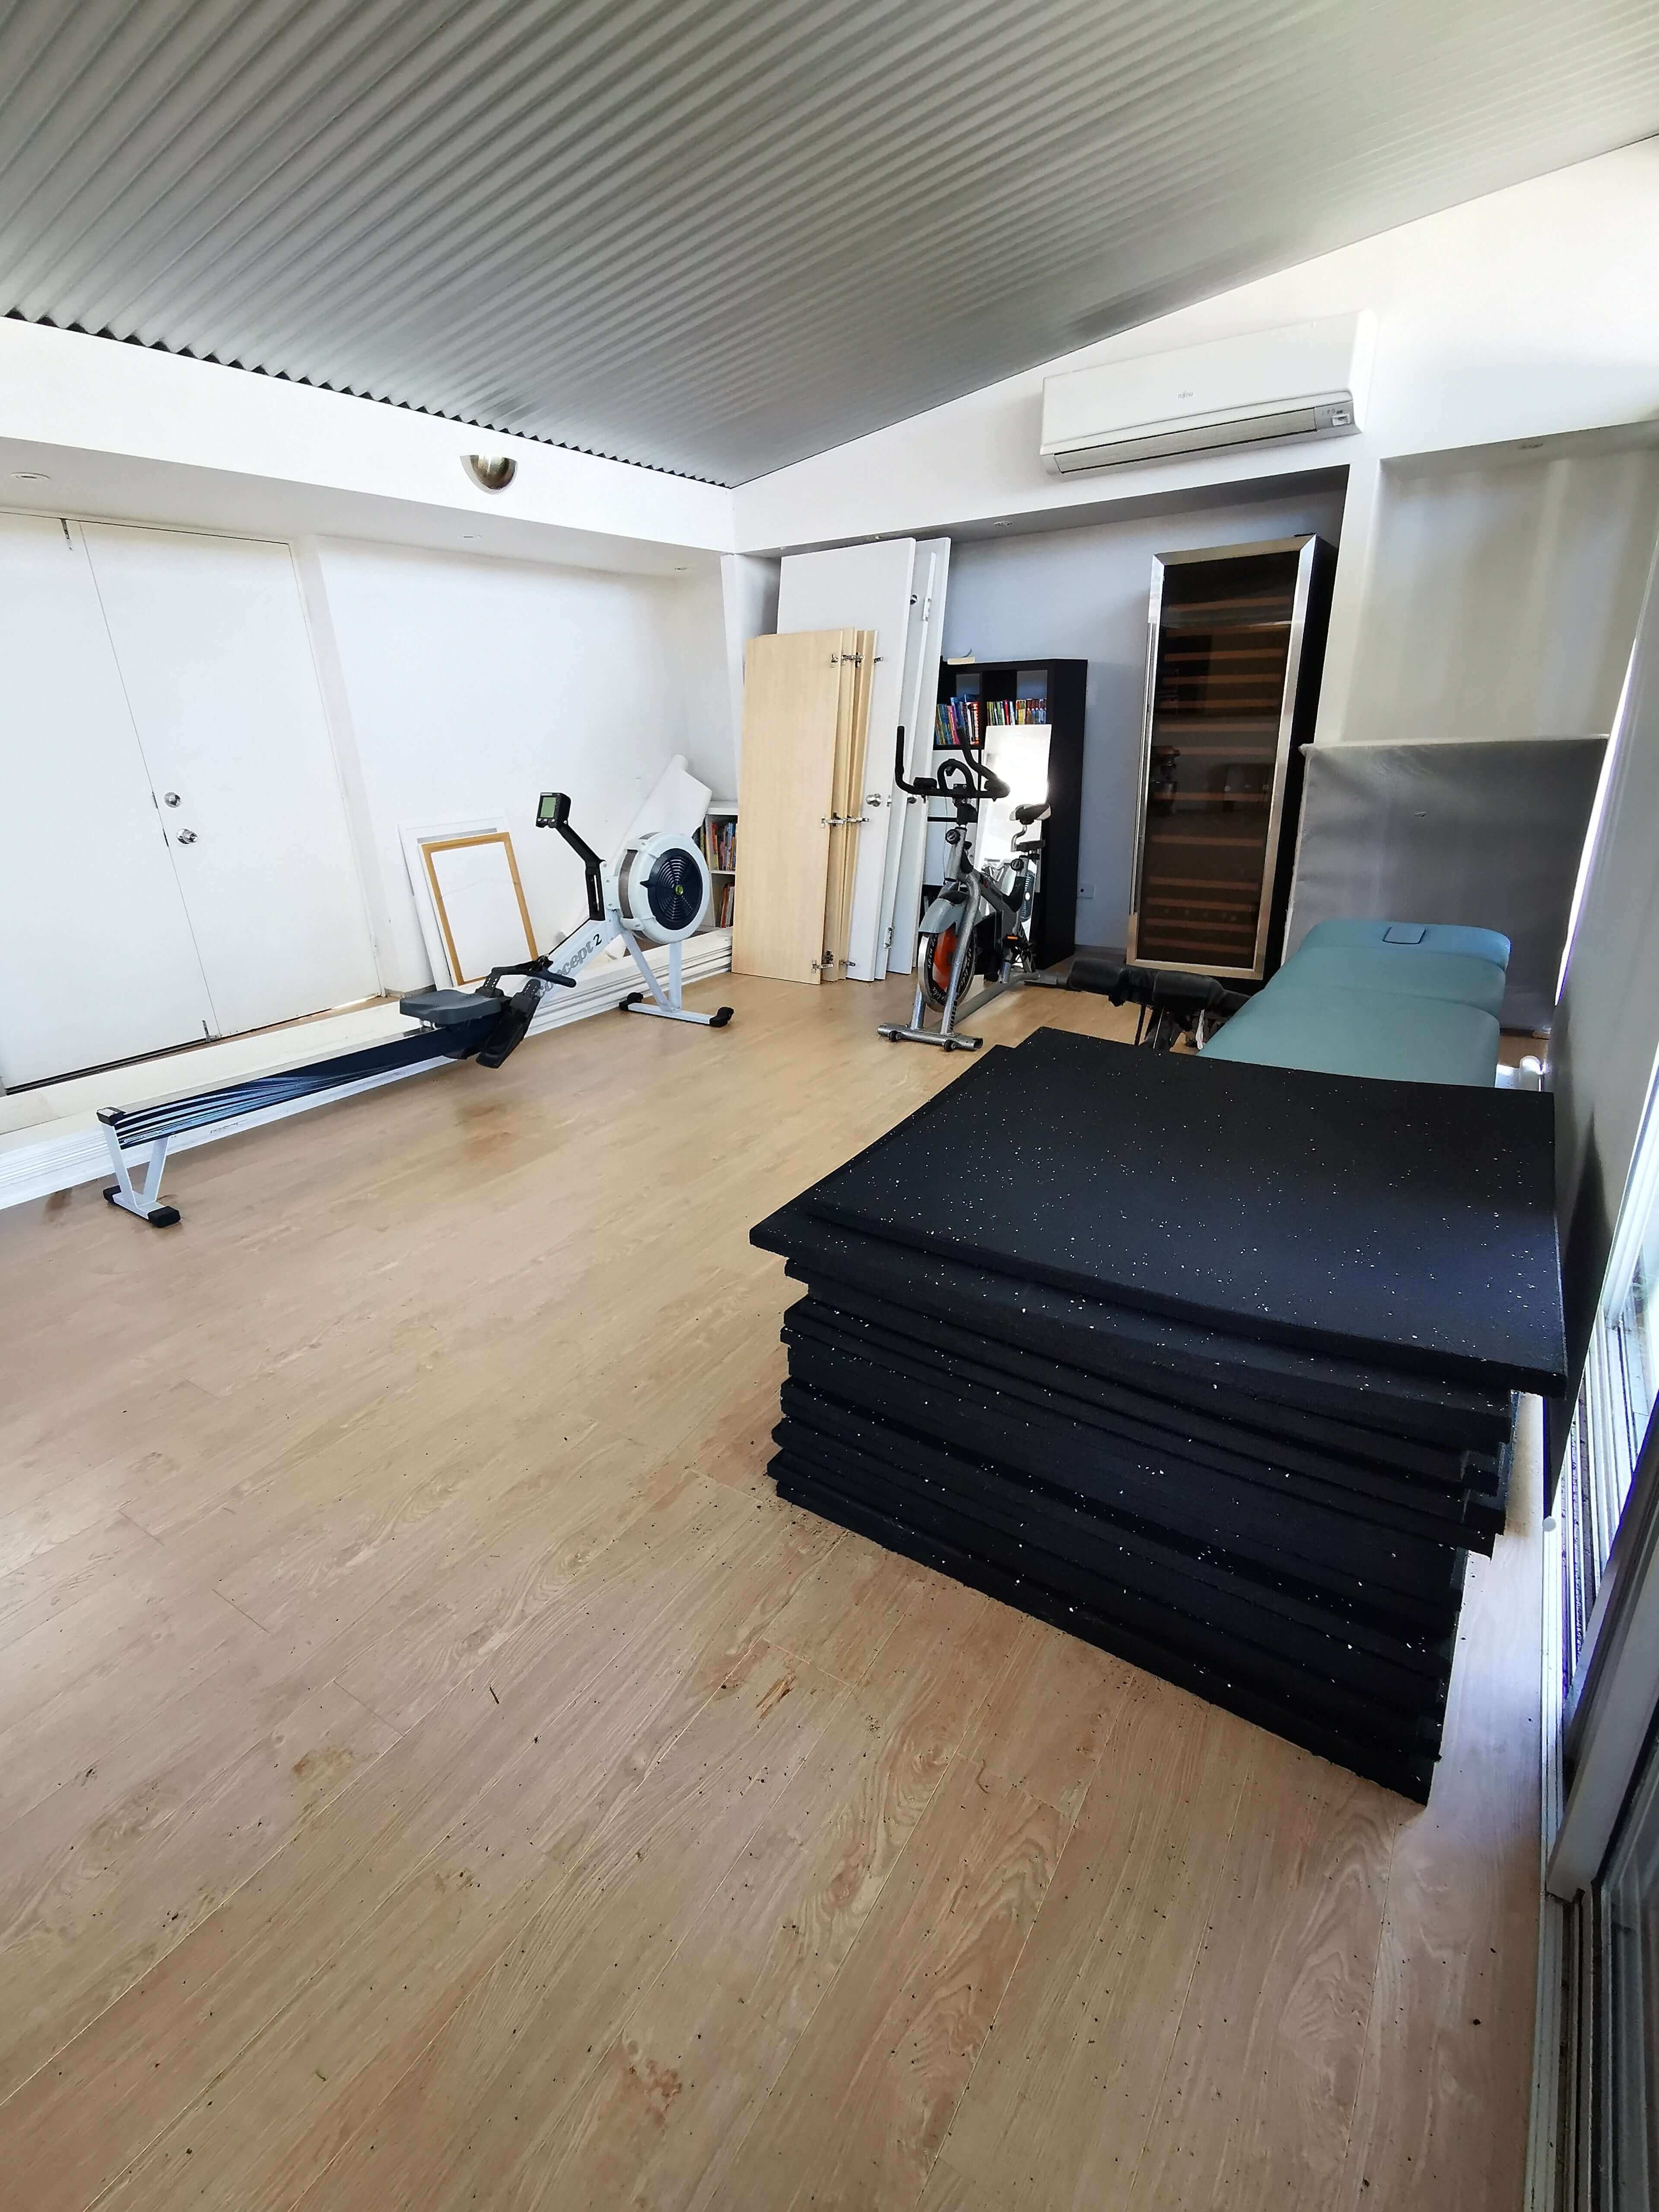 Rubber Gym Flooring Black 1000x1000x15mm Indoor Outdoor Exercise Fitness Sport Tiles Mats Durable | INSOURCE